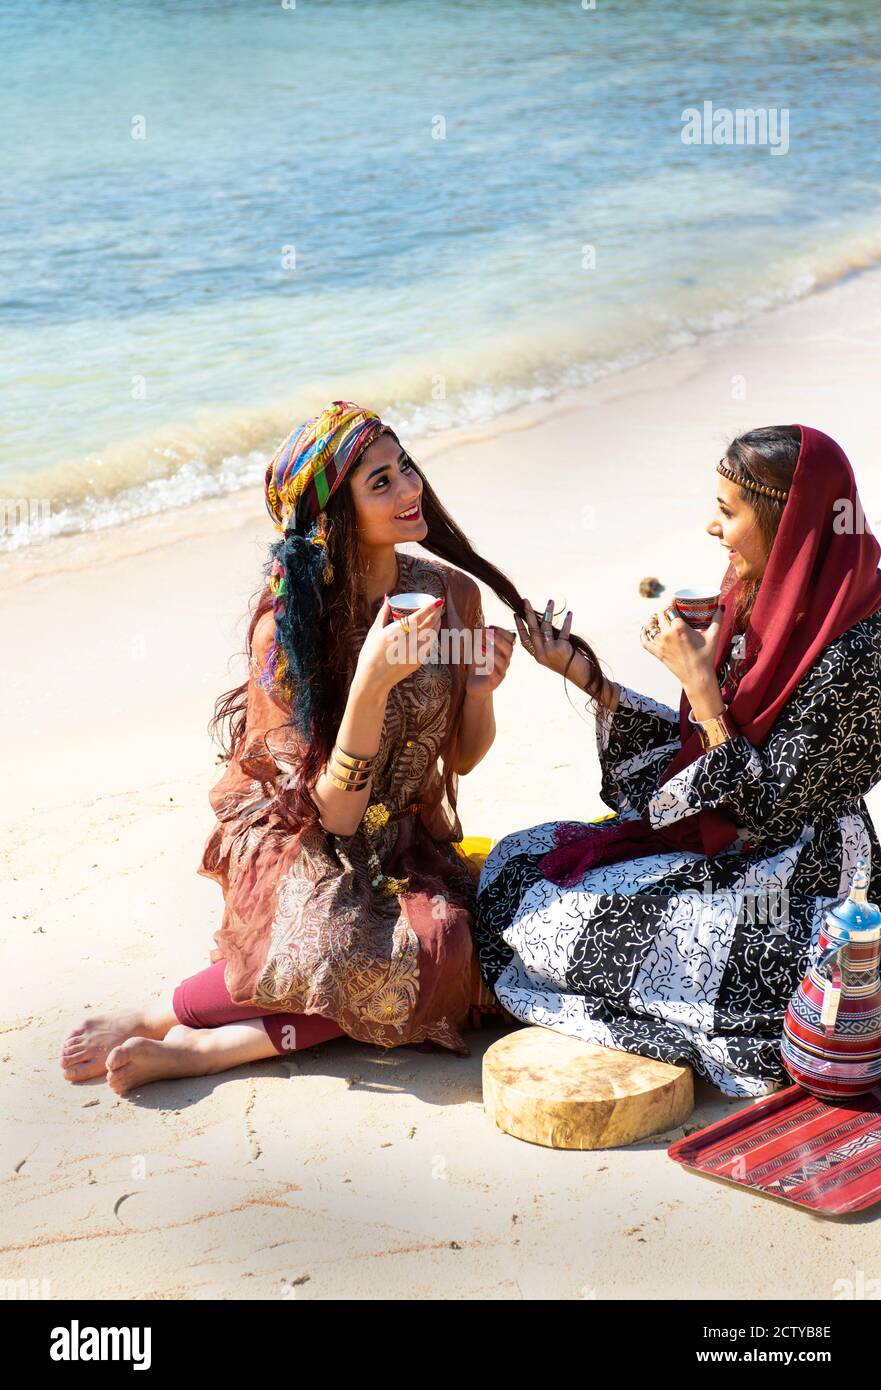 Donne in spiaggia in Arabia Saudita bere tè arabo spiaggia Foto Stock